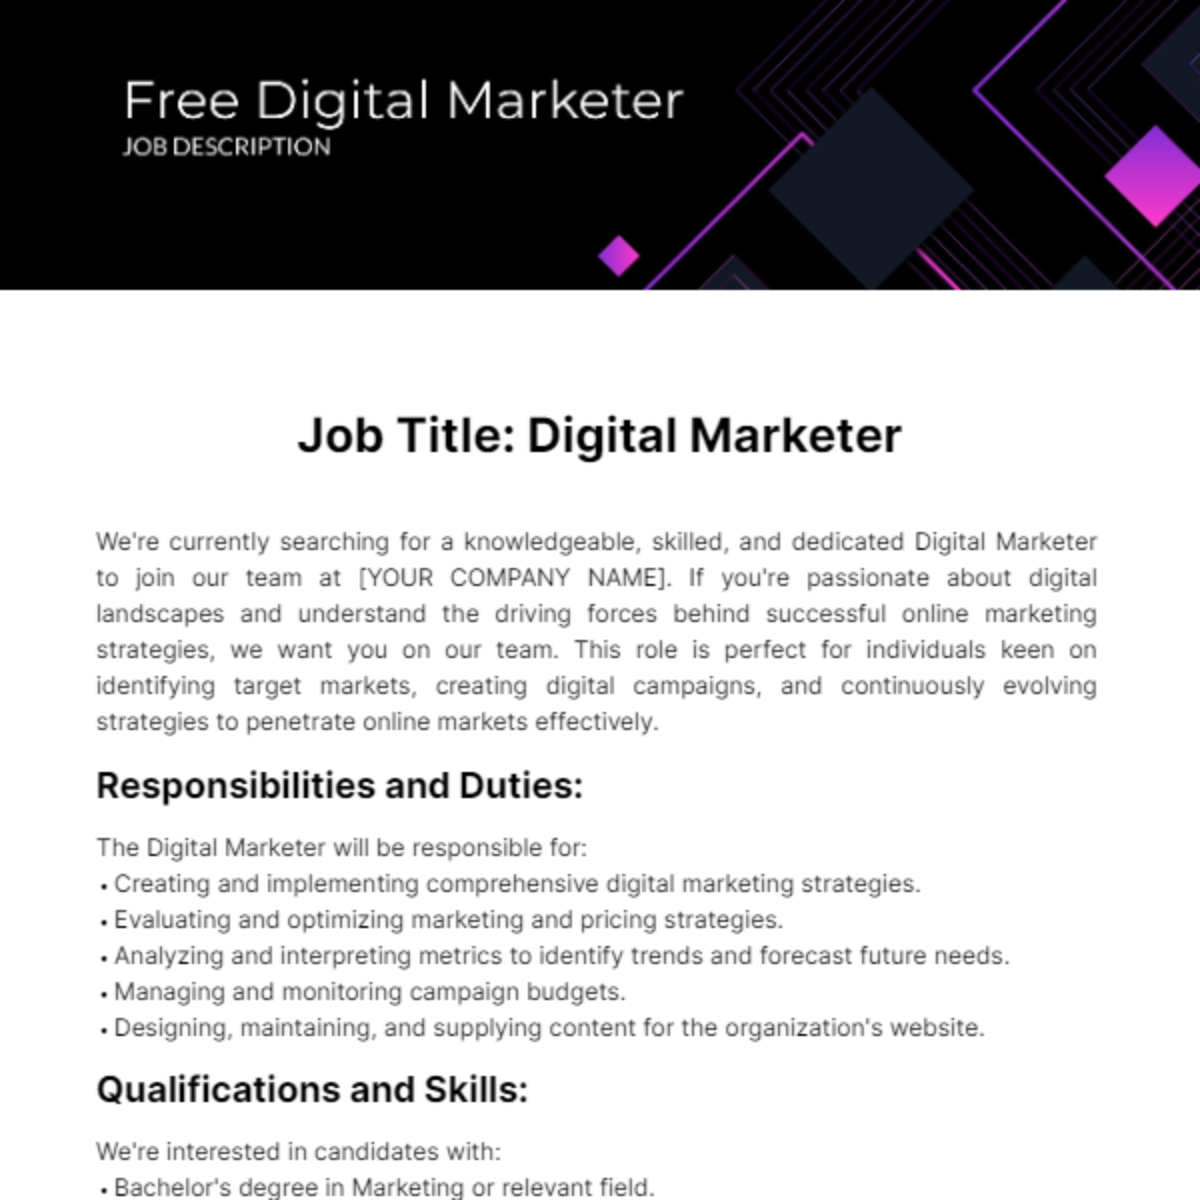 Free Digital Marketer Job Description Template